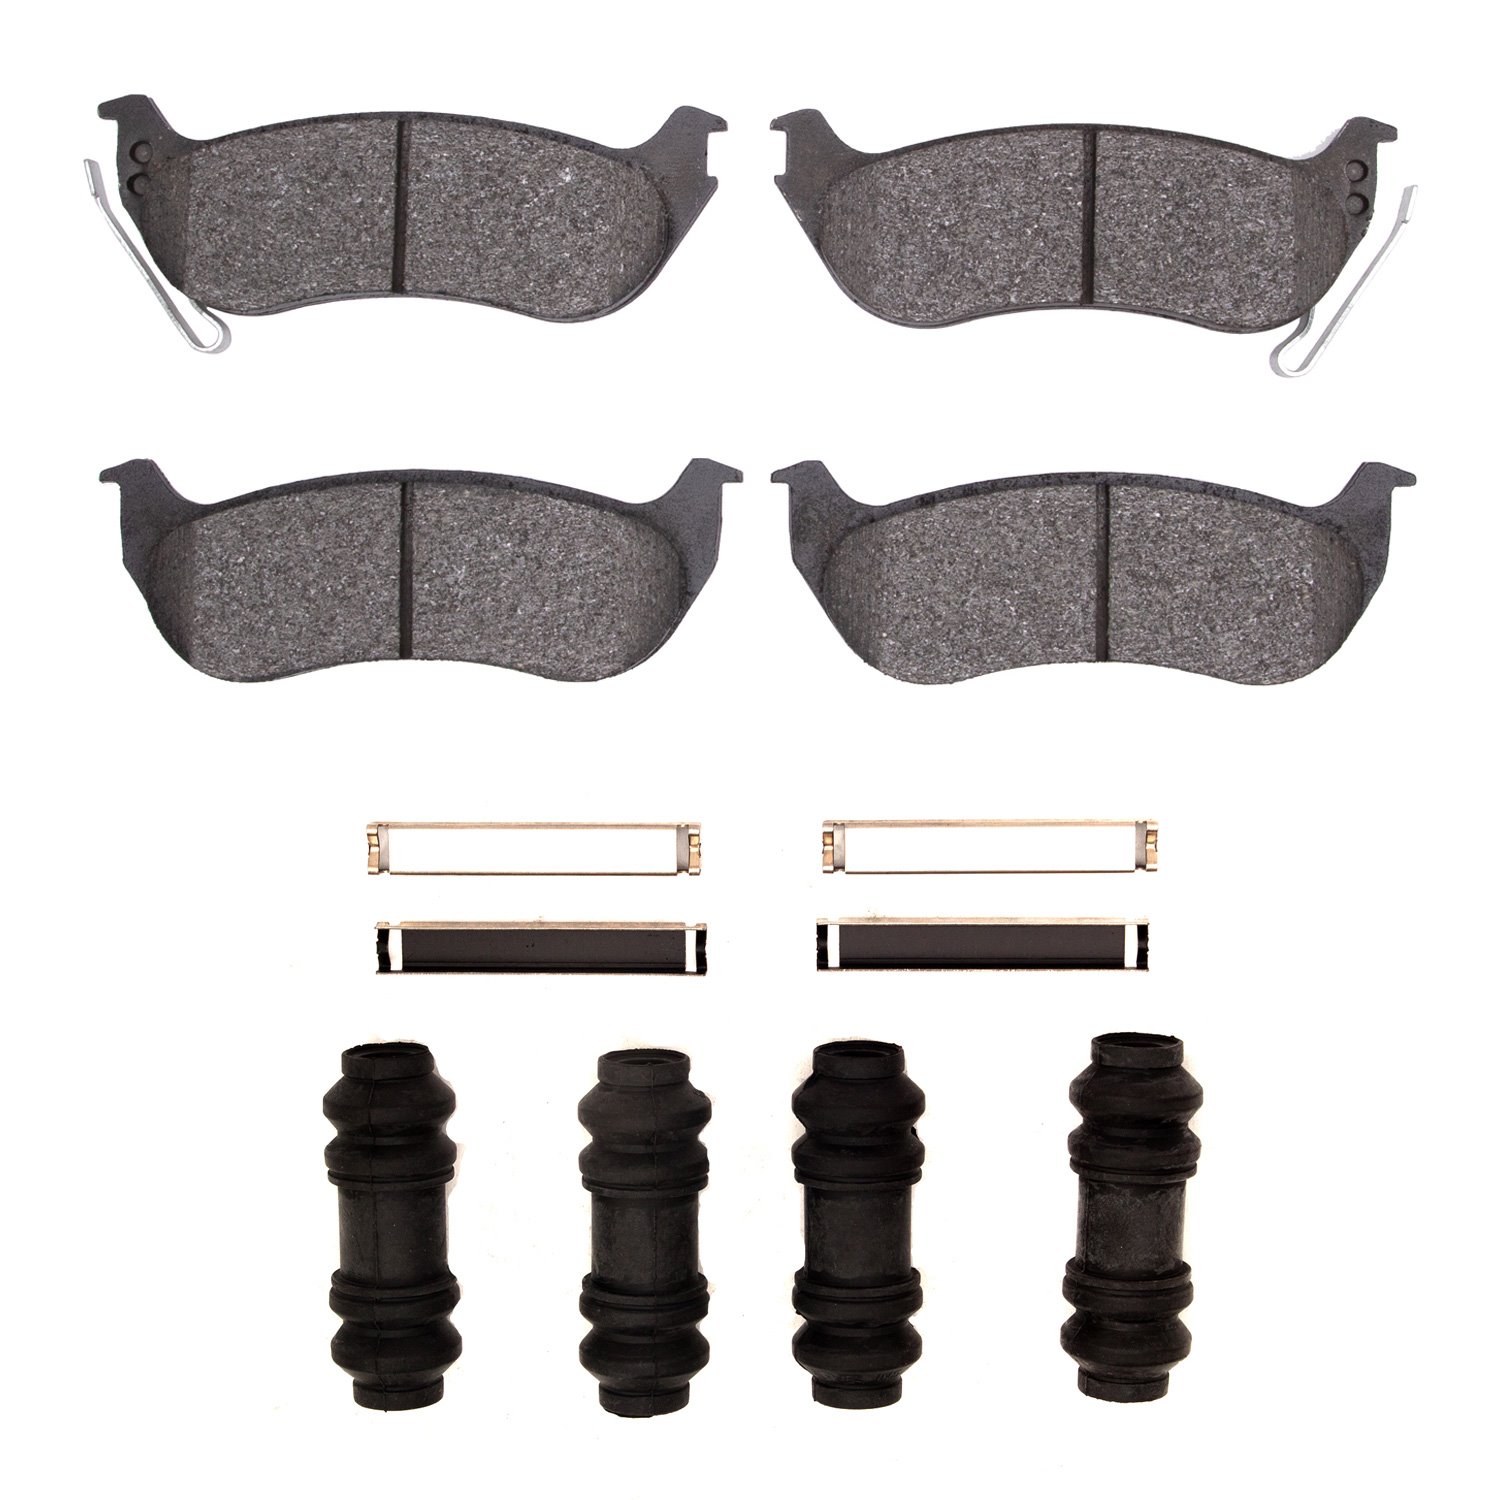 Ceramic Brake Pads & Hardware Kit, 2003-2010 Fits Multiple Makes/Models, Position: Rear